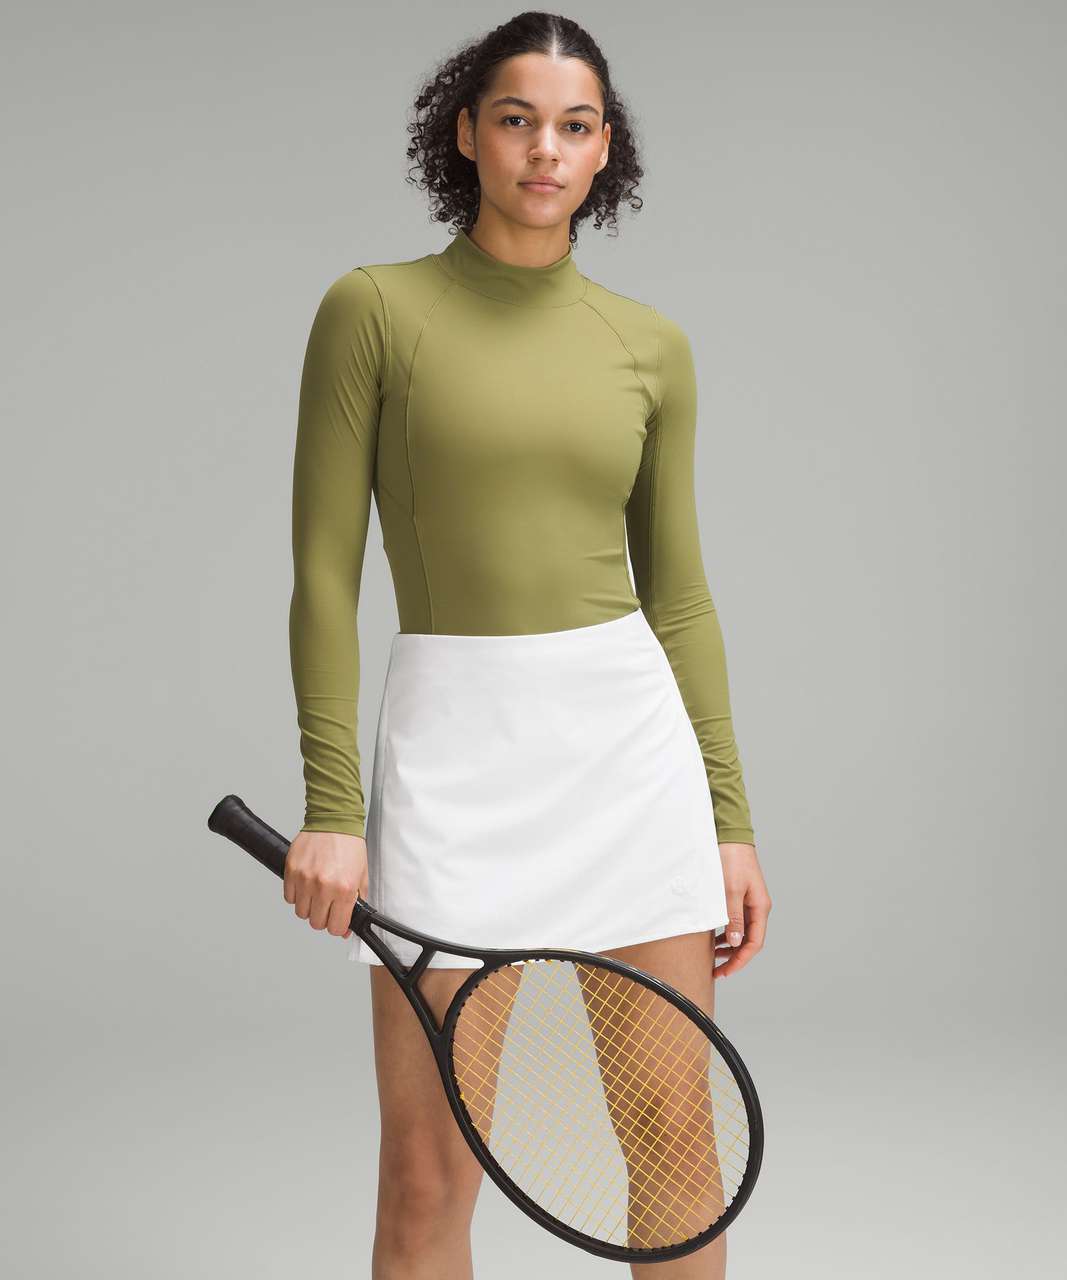 Lululemon Peek Pleat High-Rise Tennis Skirt - White